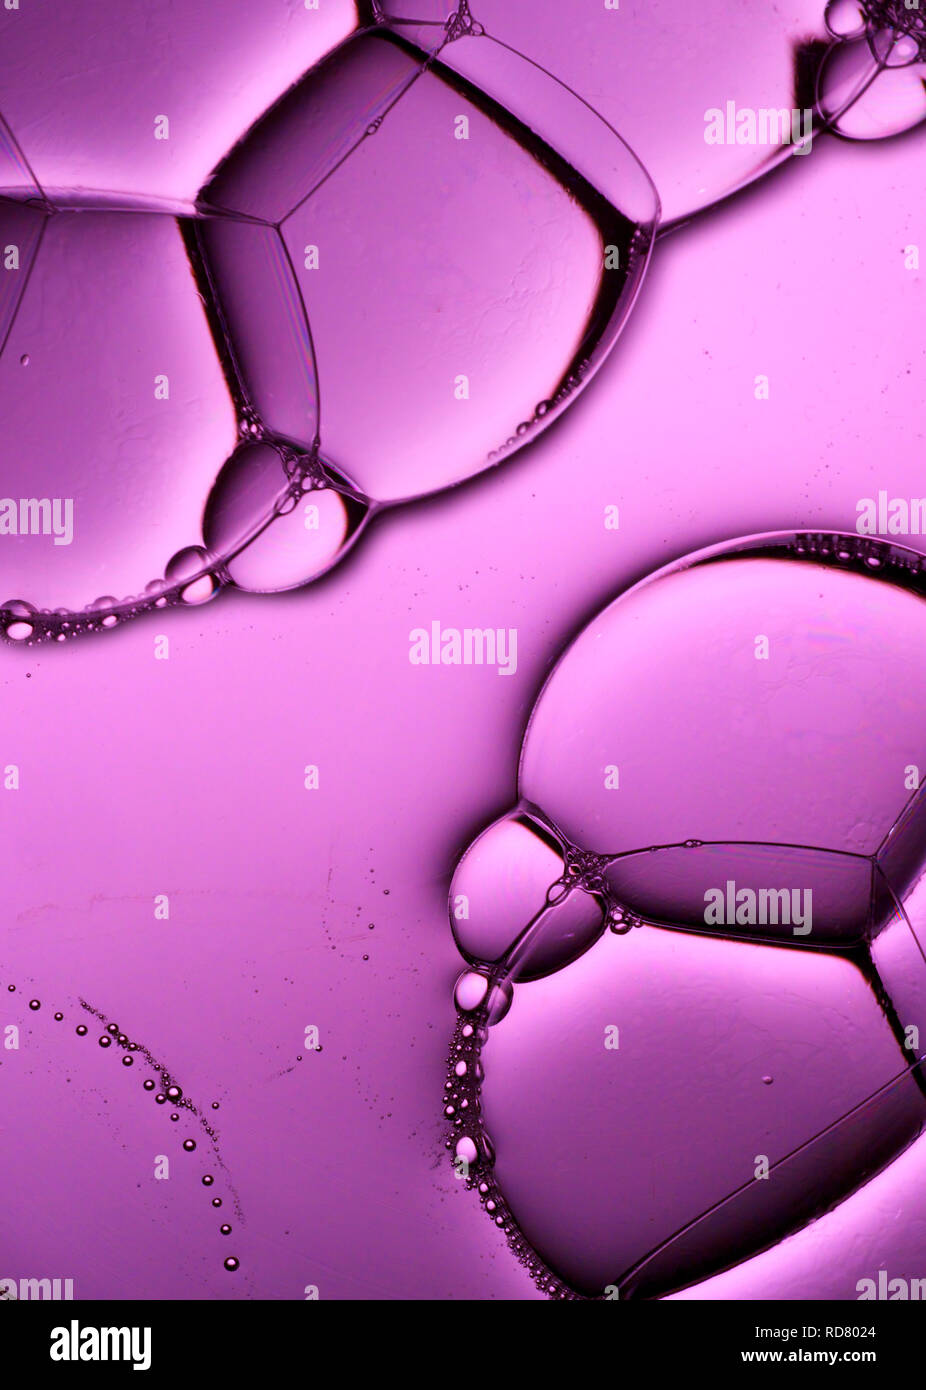 Close up of bubbles on purple background, studio shot Stock Photo